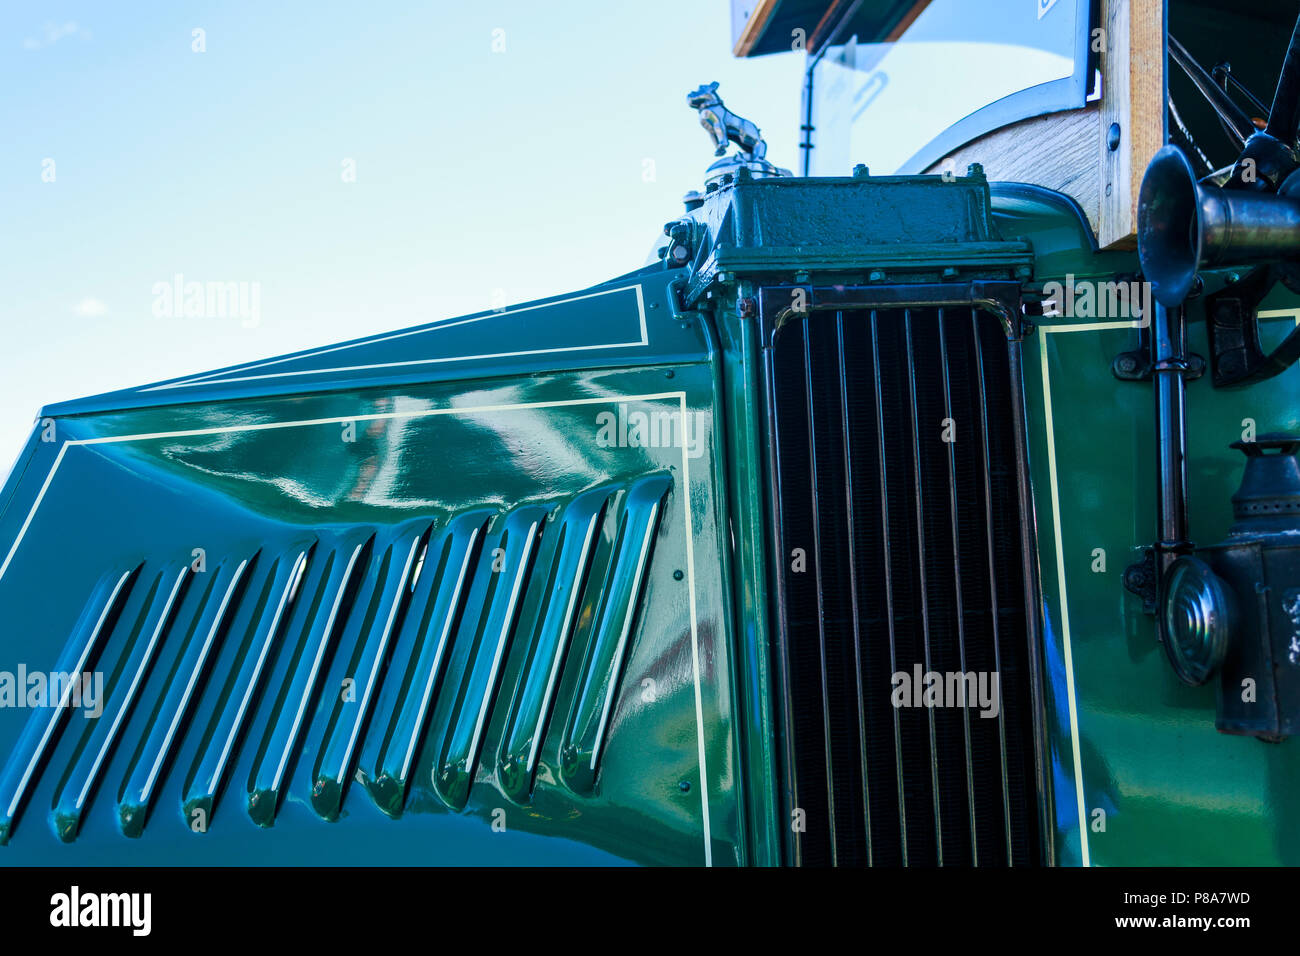 Beautifully-restored 1920s (1926?) Mack Truck detail, showing Bulldog and louvered engine hood, Carlisle, PA 2018 Stock Photo